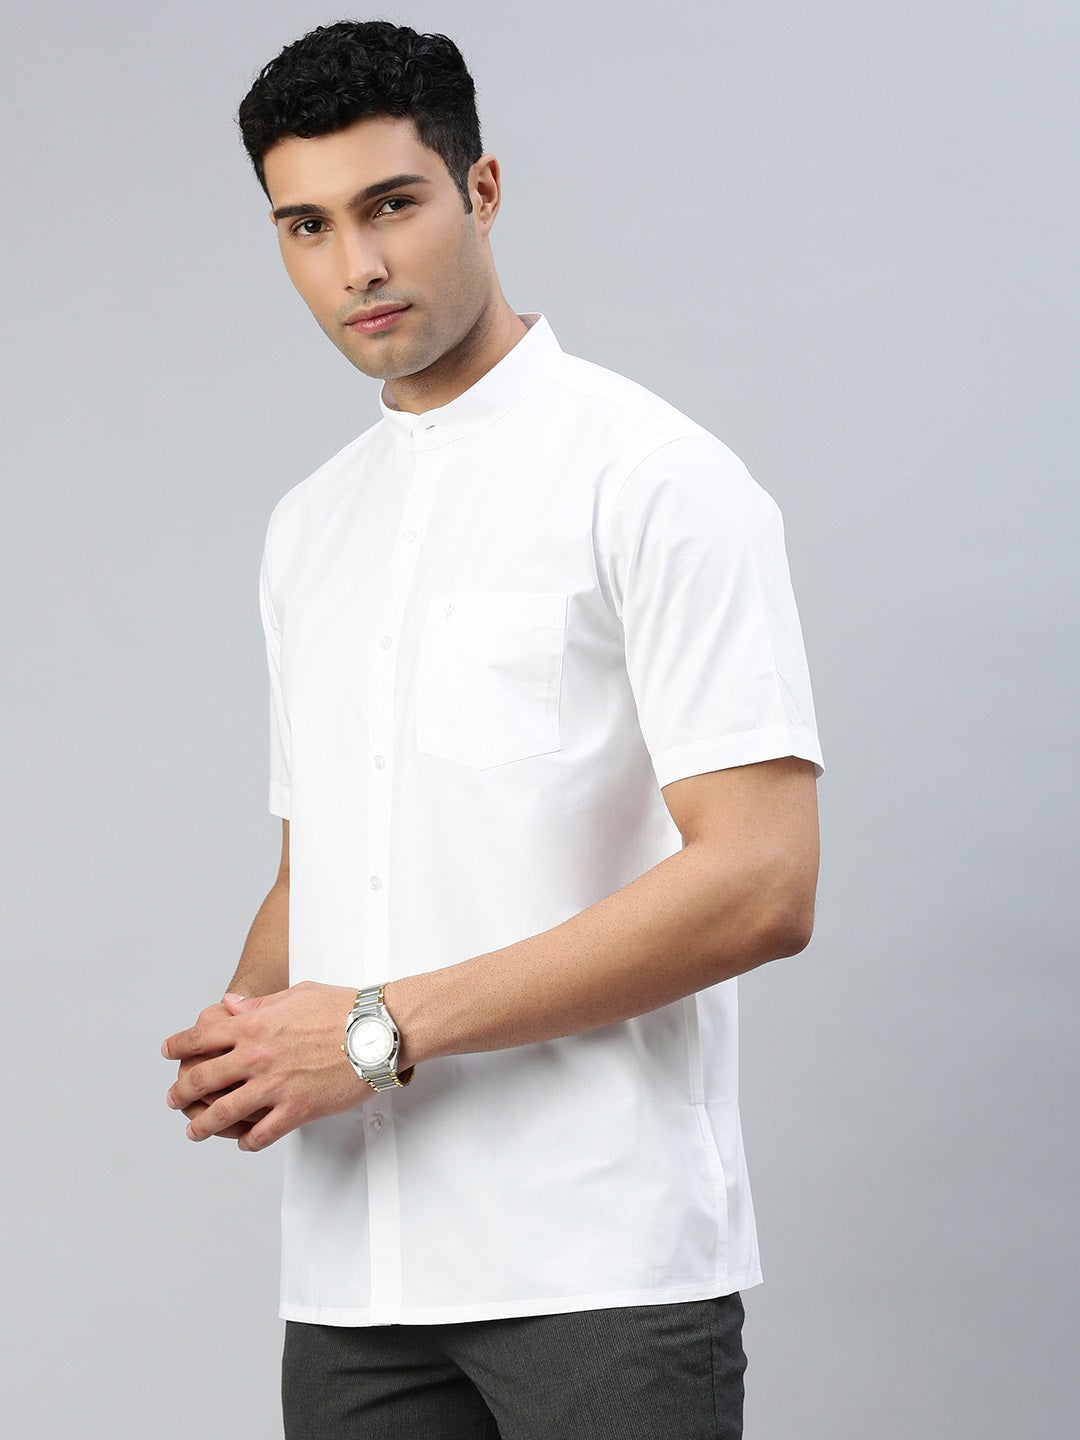 Mens Grand Look 100% Cotton Chinese Collar White Shirt